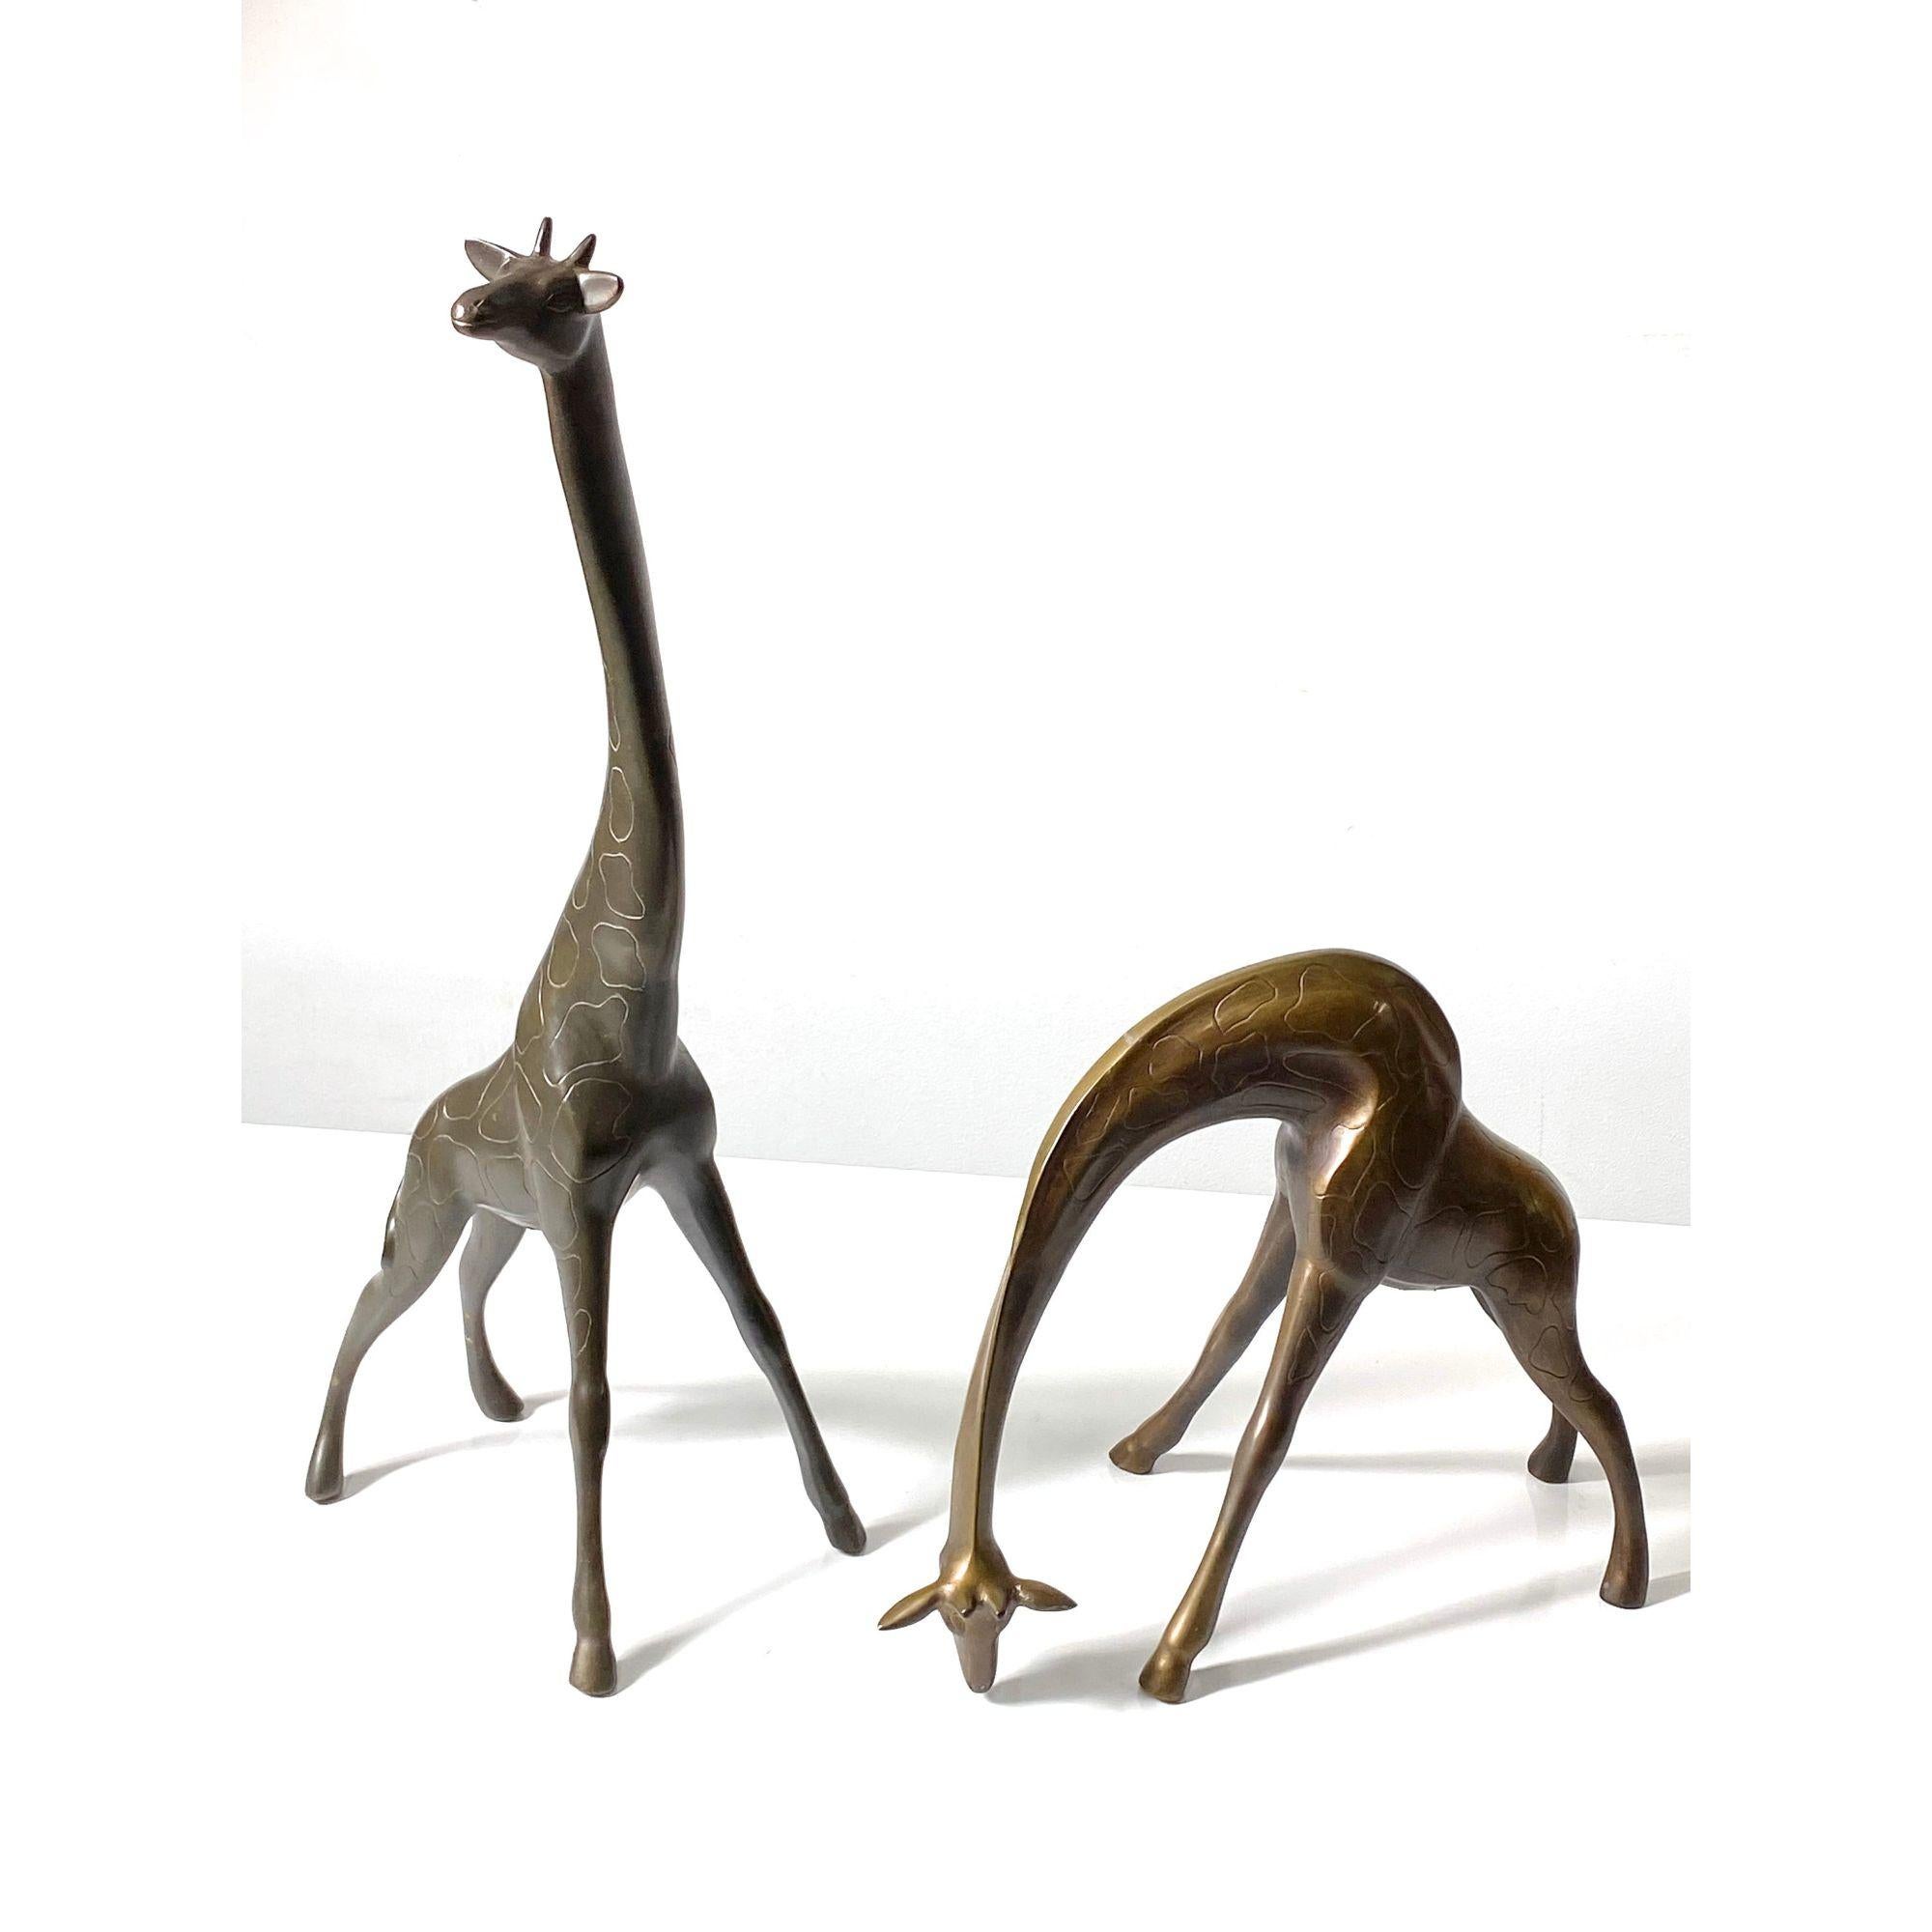 Modern Pair of Vintage Giraffe Sculptures in Bronze and Brass, circa 1970s